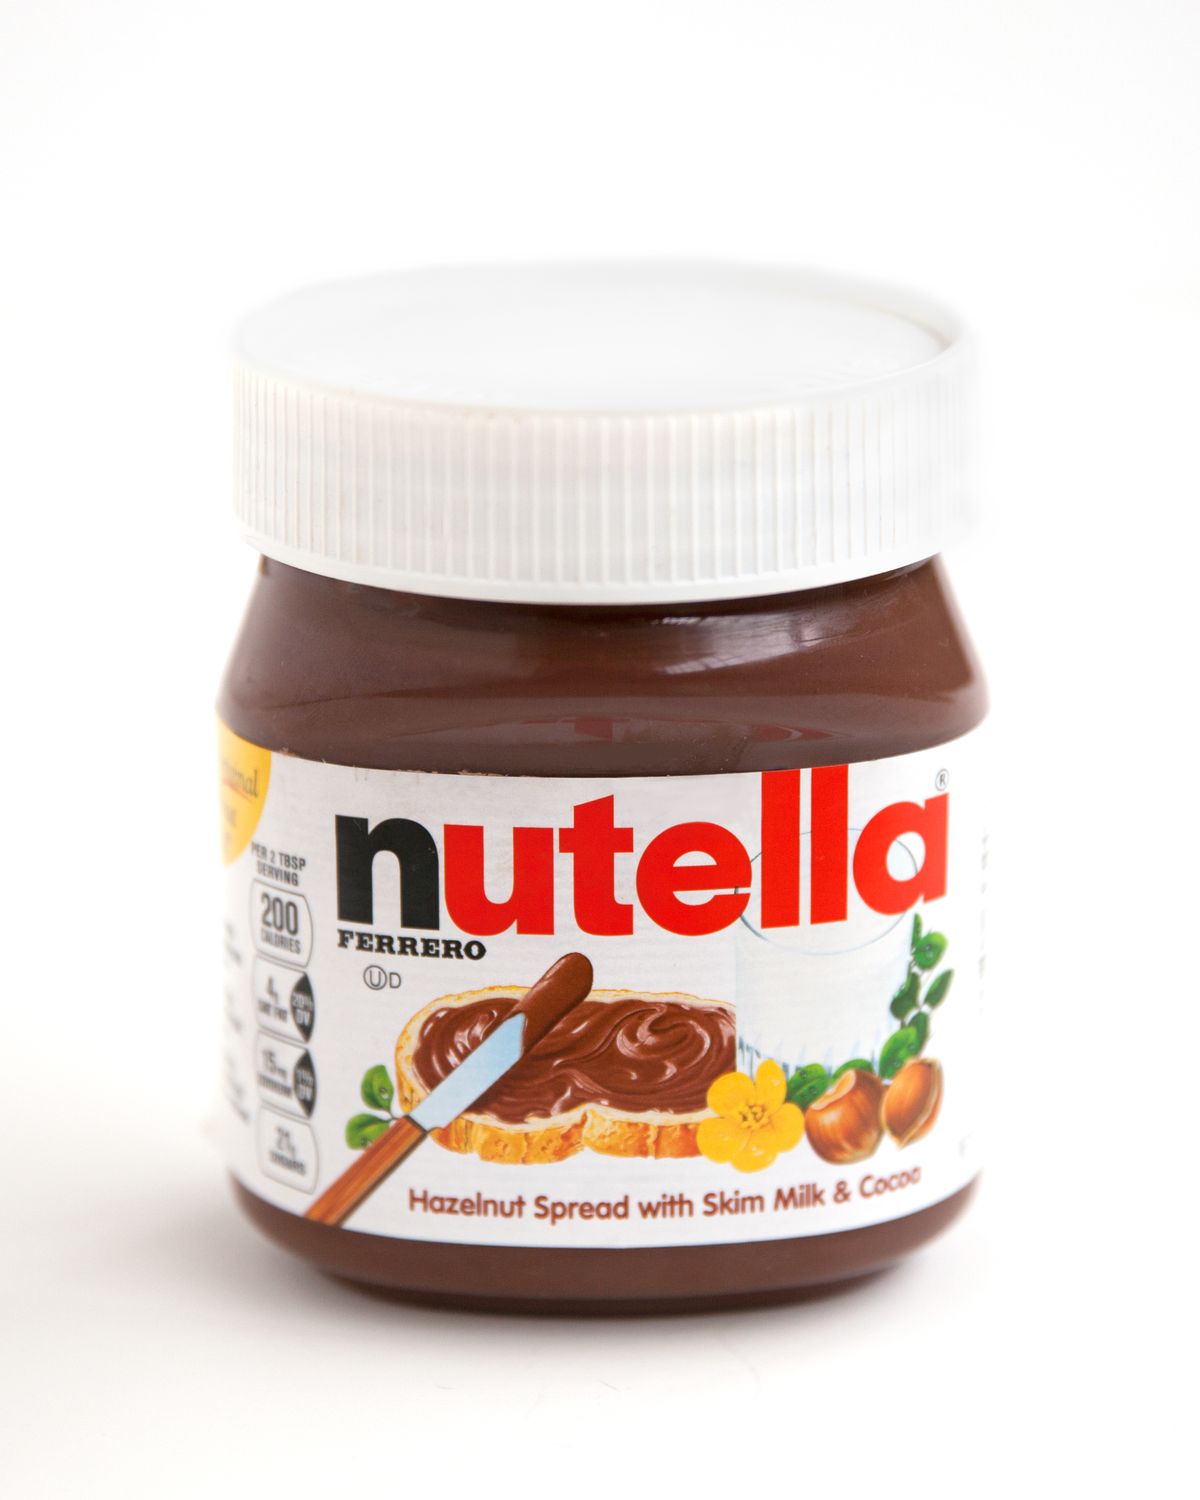 nutella-product-3688-d111951.jpg